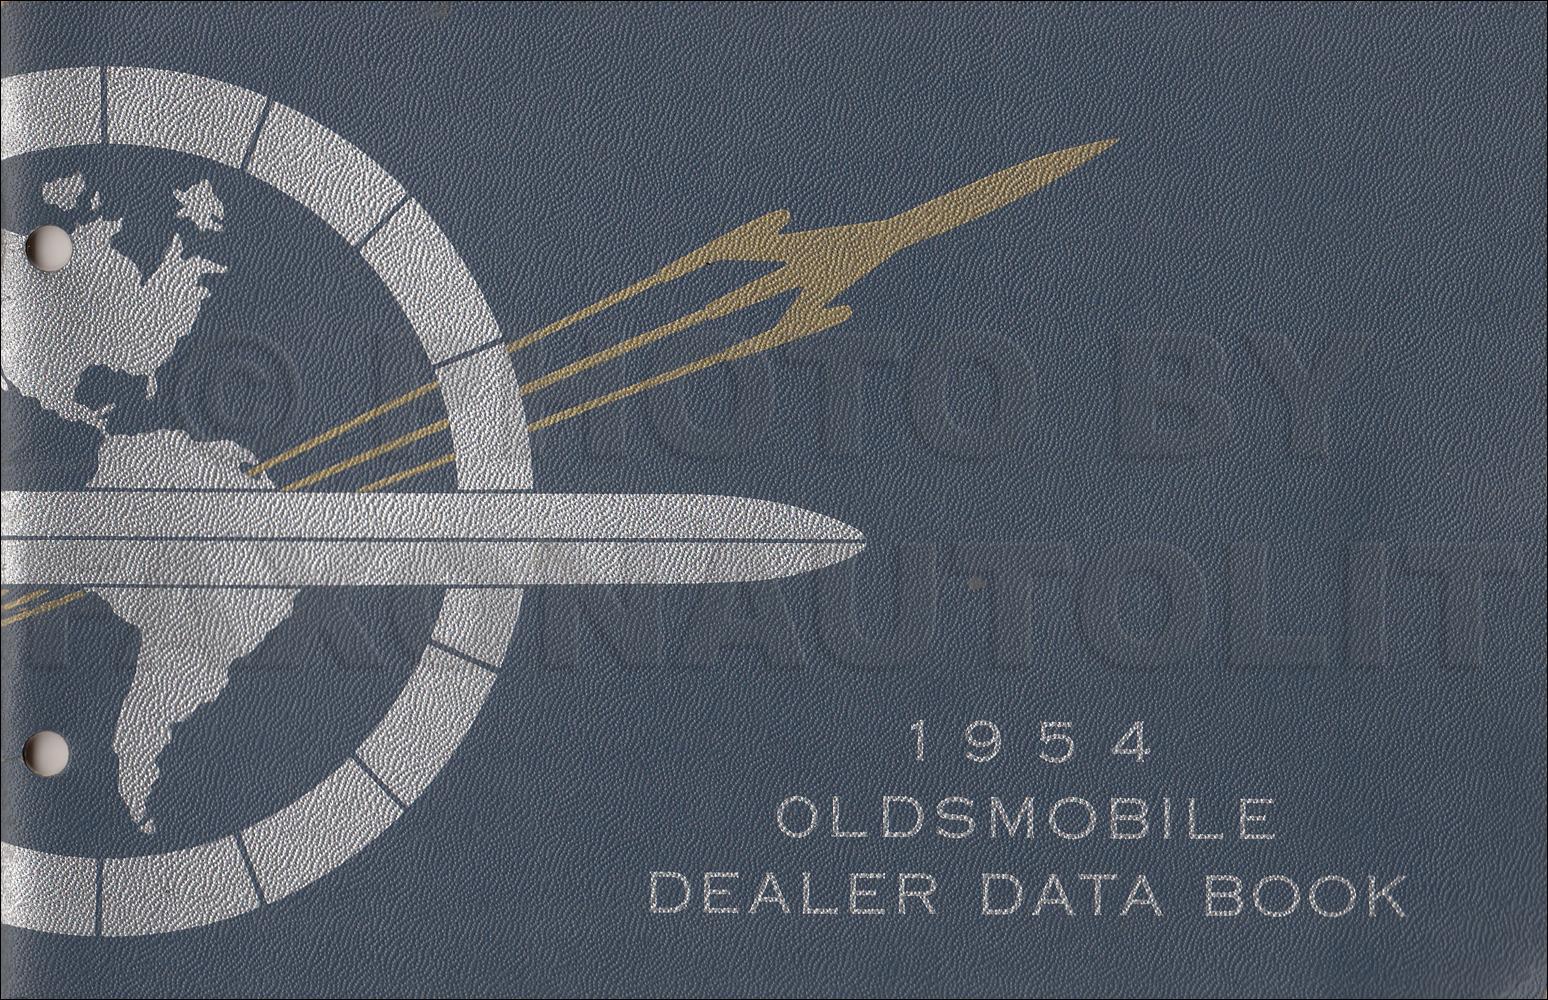 1954 Oldsmobile Dealer Data Book Original